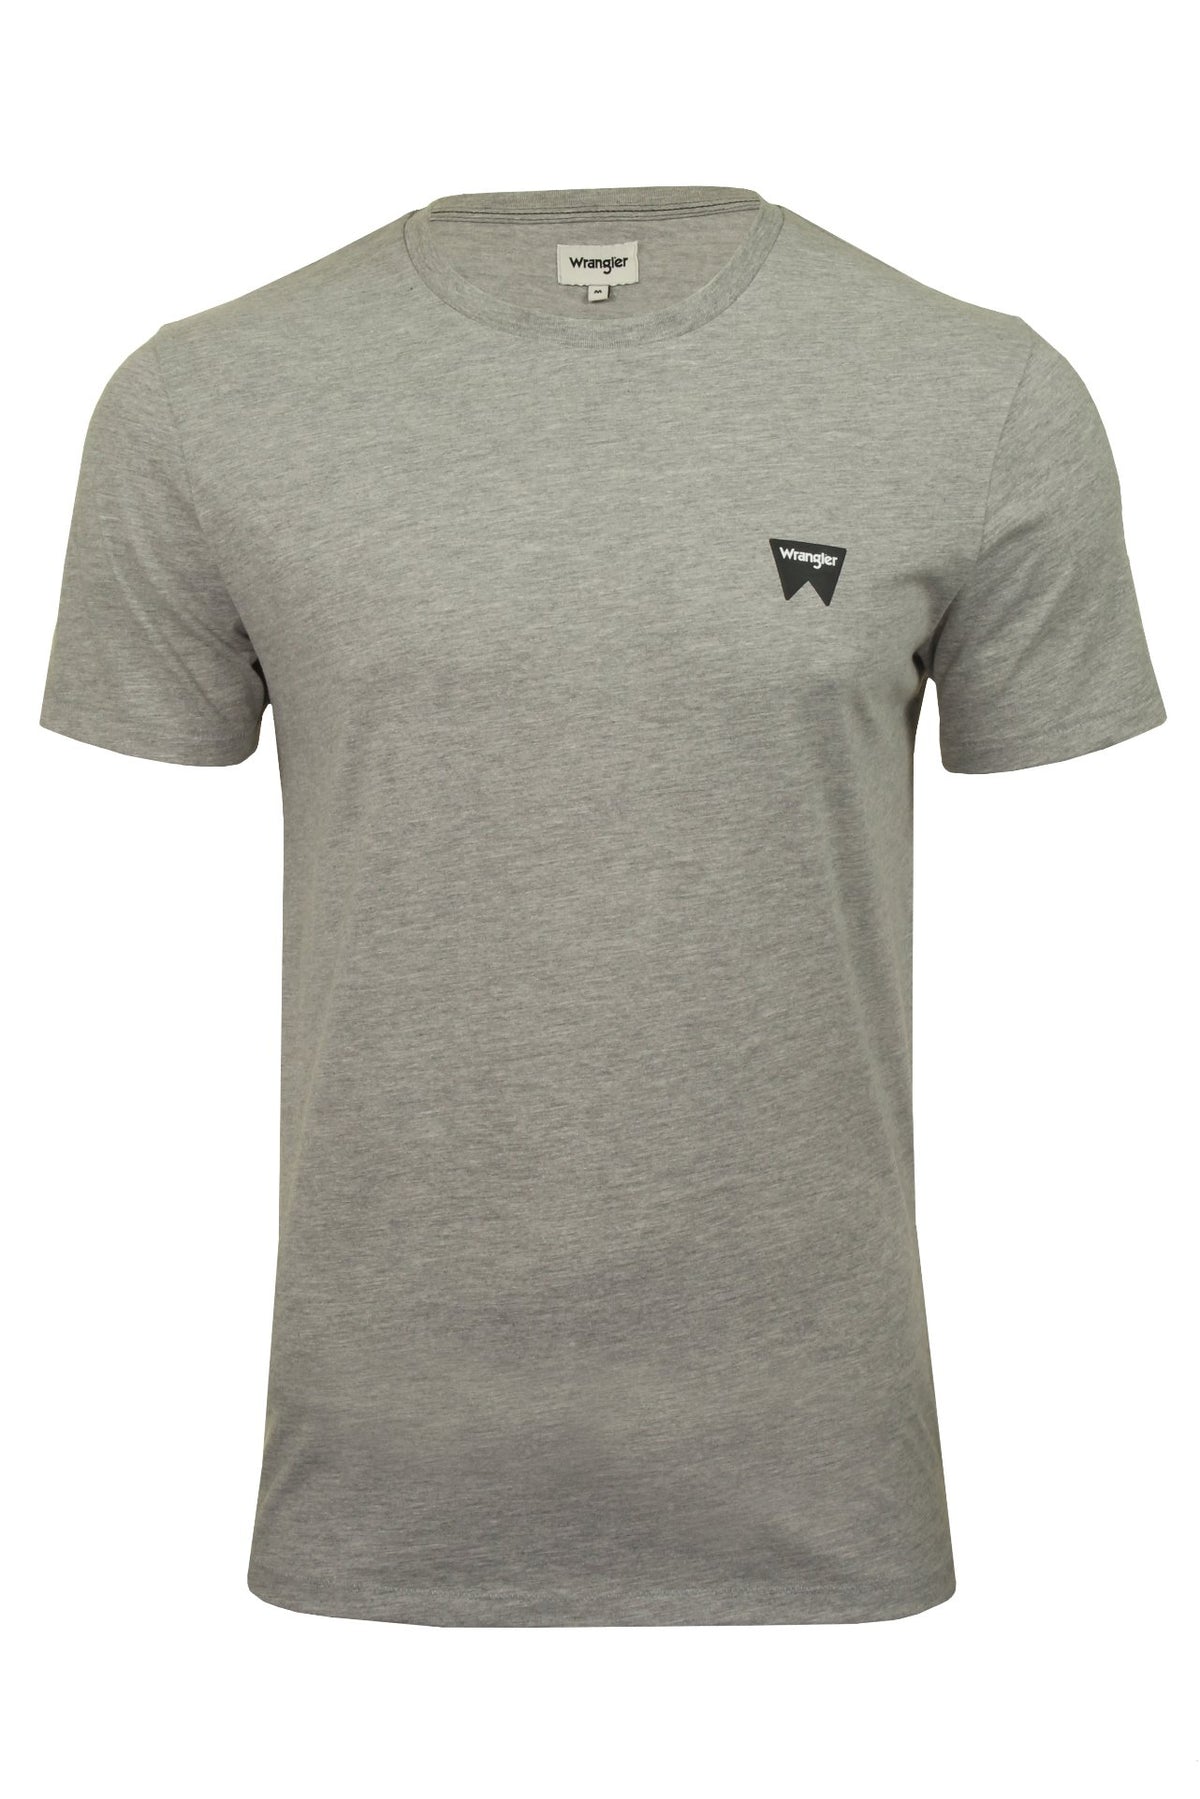 Wrangler Mens T-Shirt 'SS Sign off Tee', 01, W7C07D, Mid Grey Marl